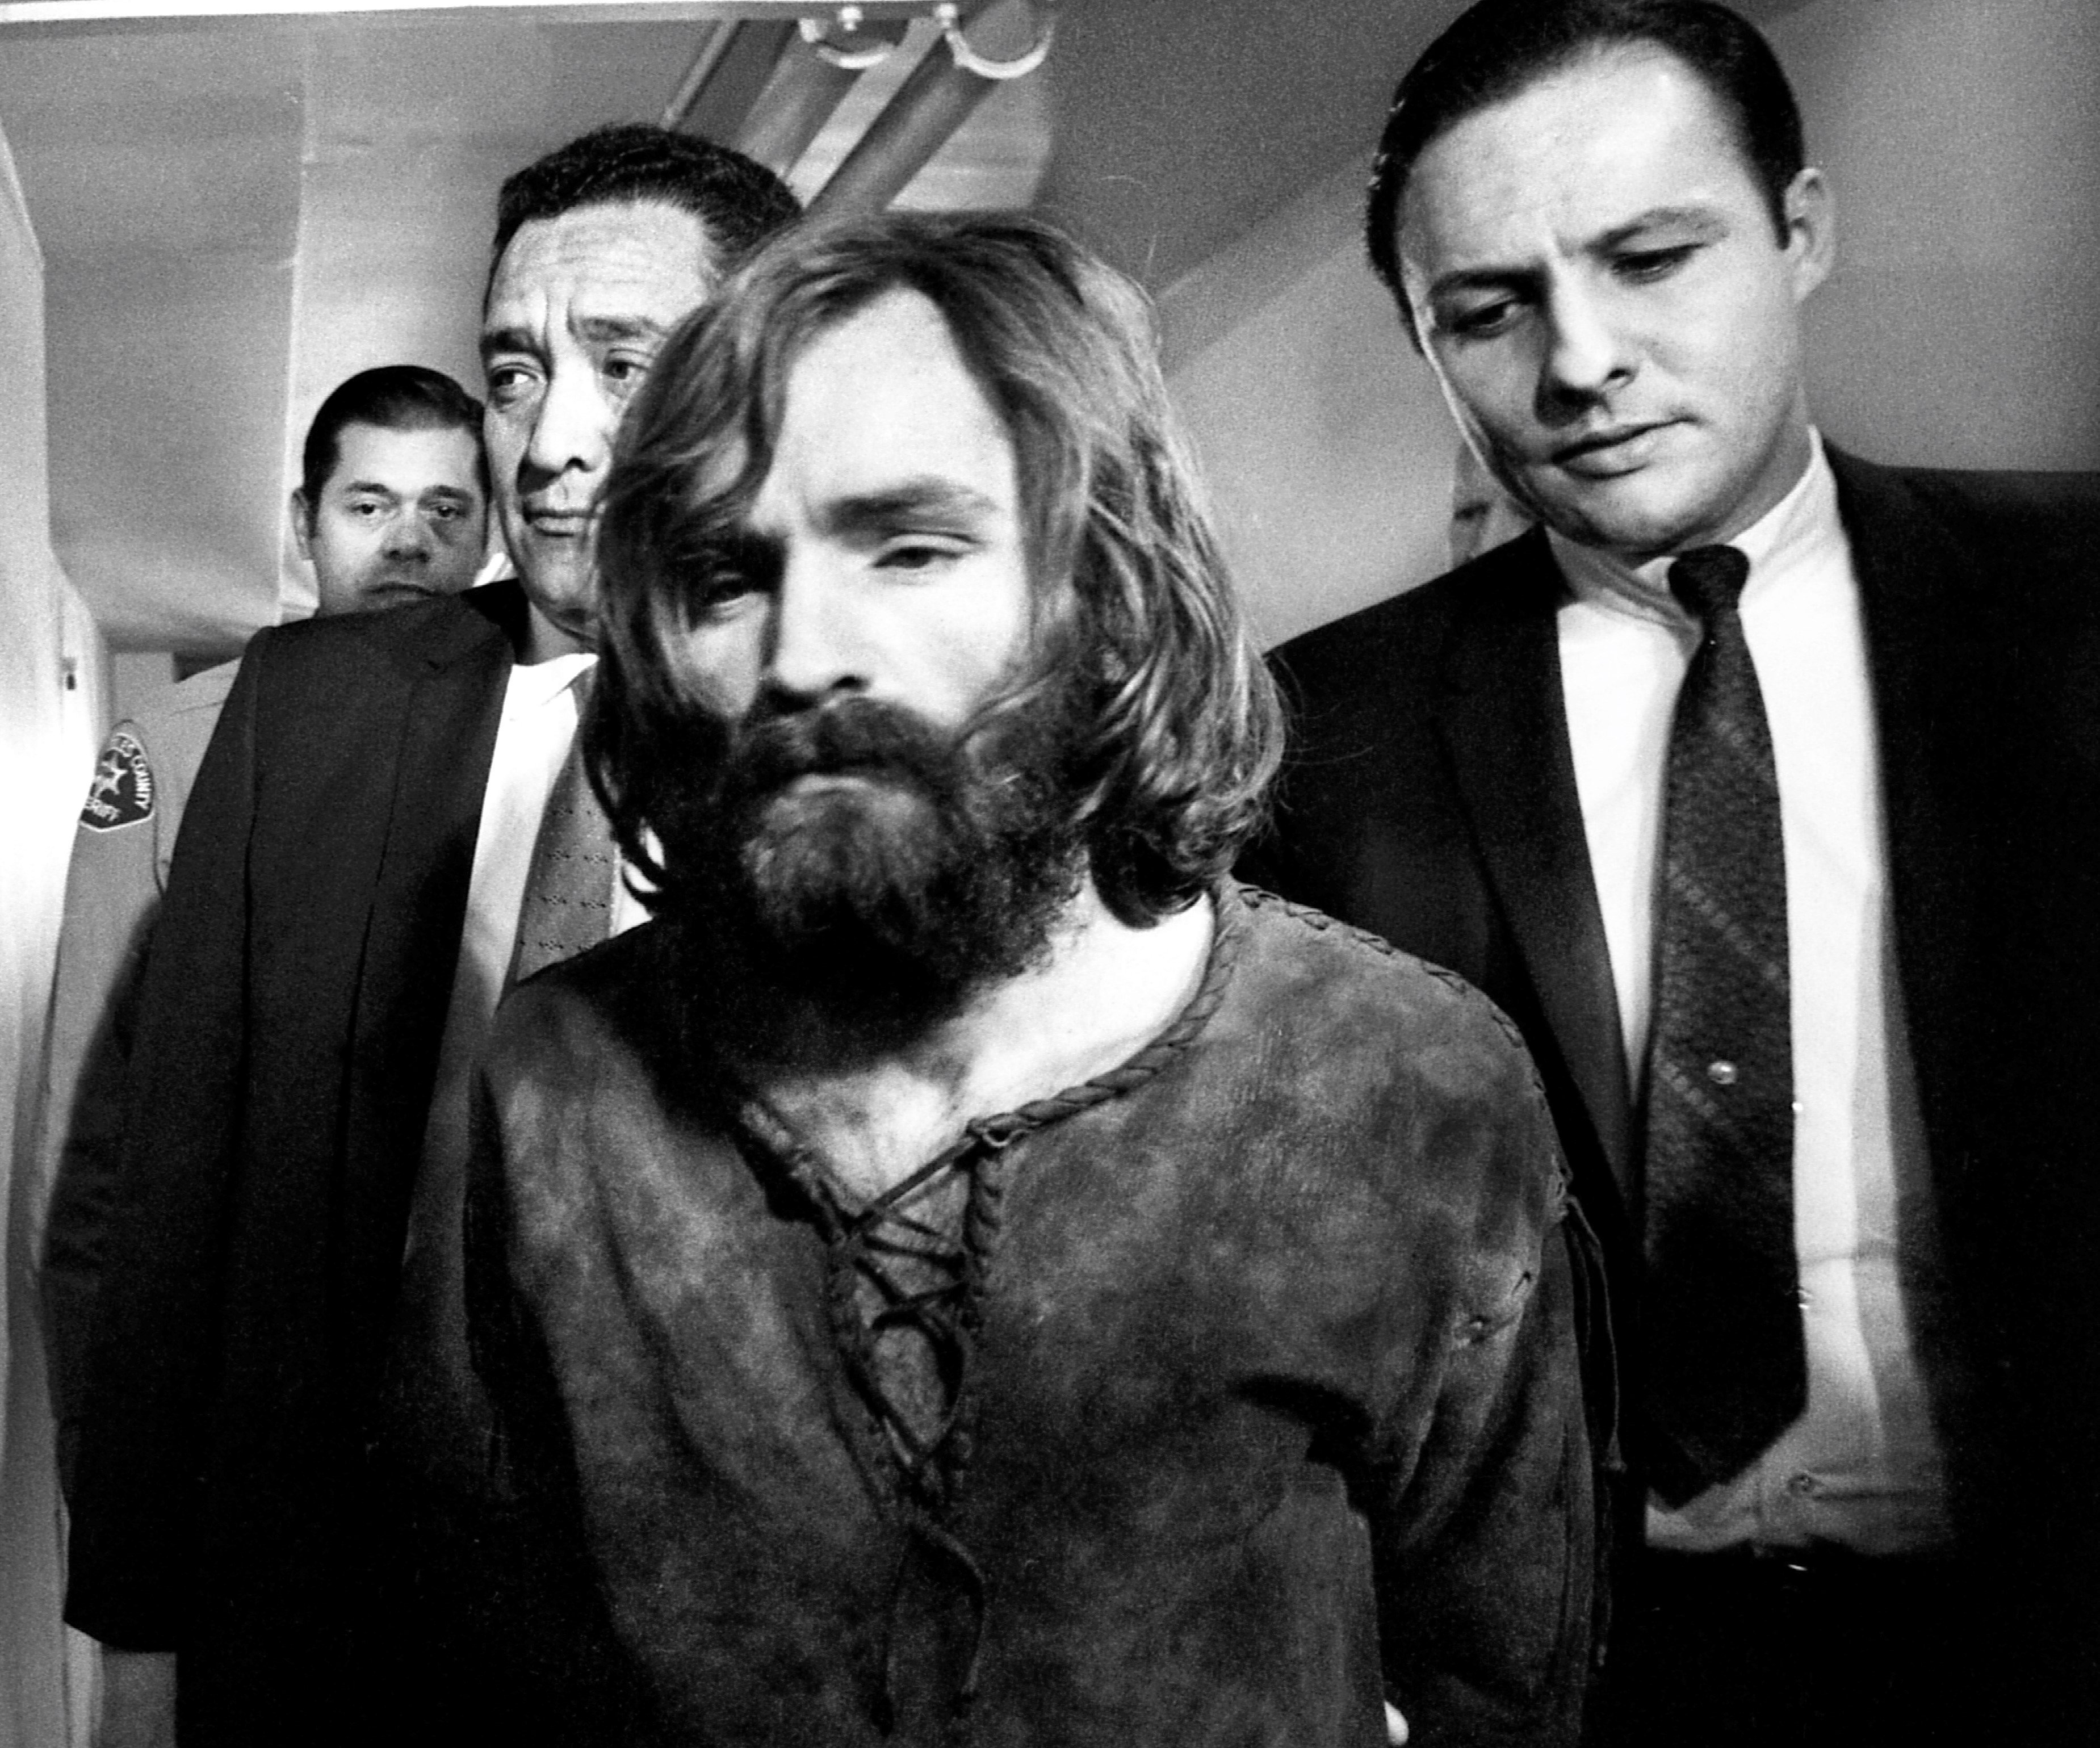 Charles Manson next to two men